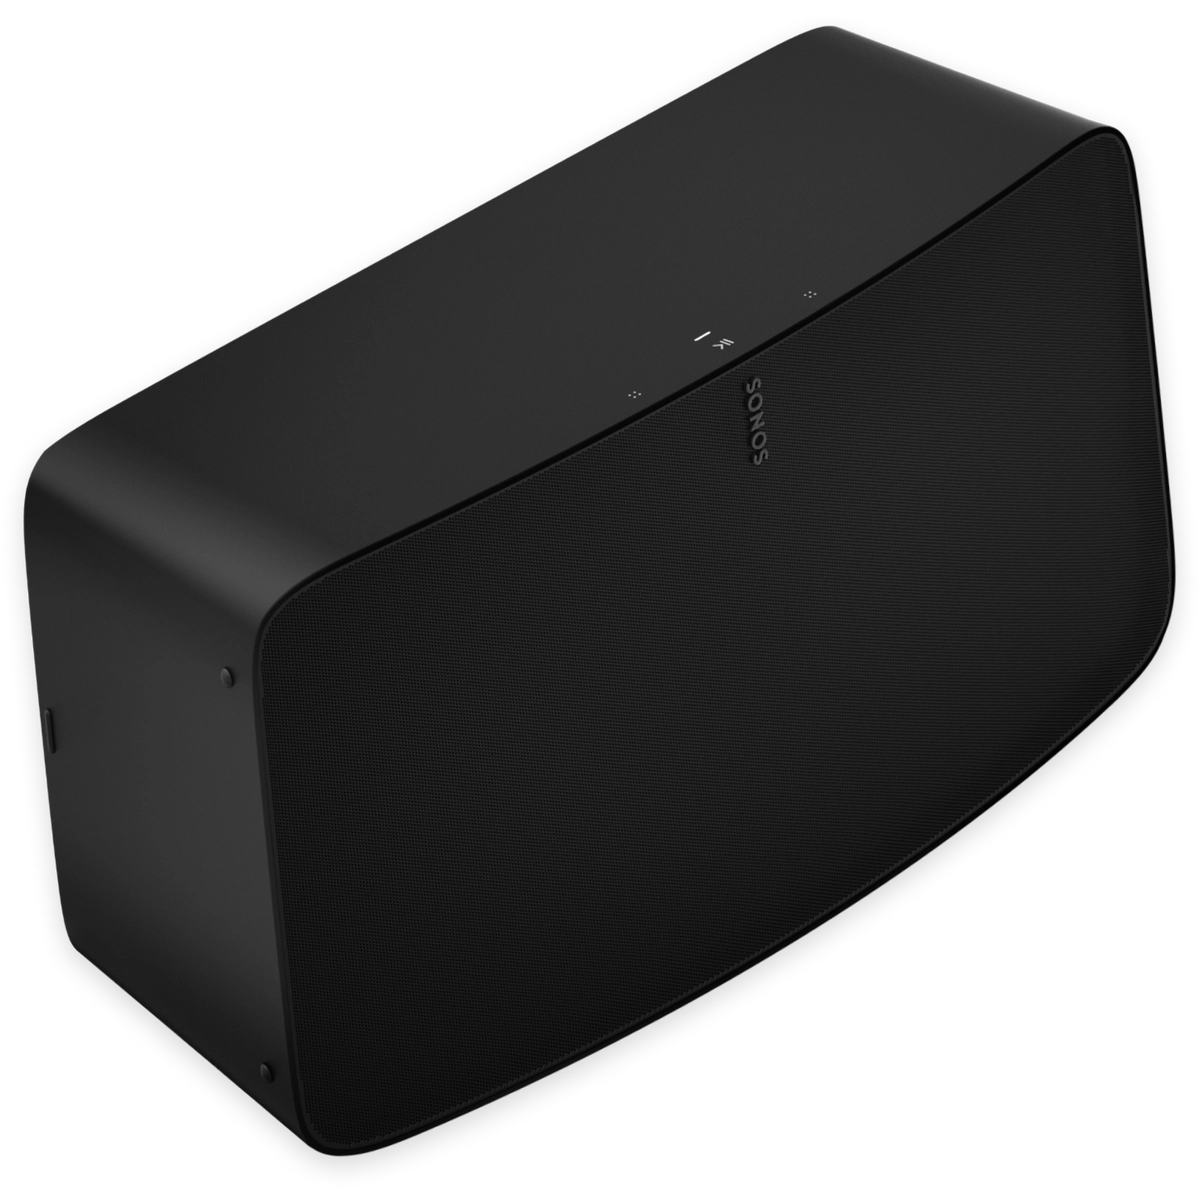 Sonos Five smart speaker